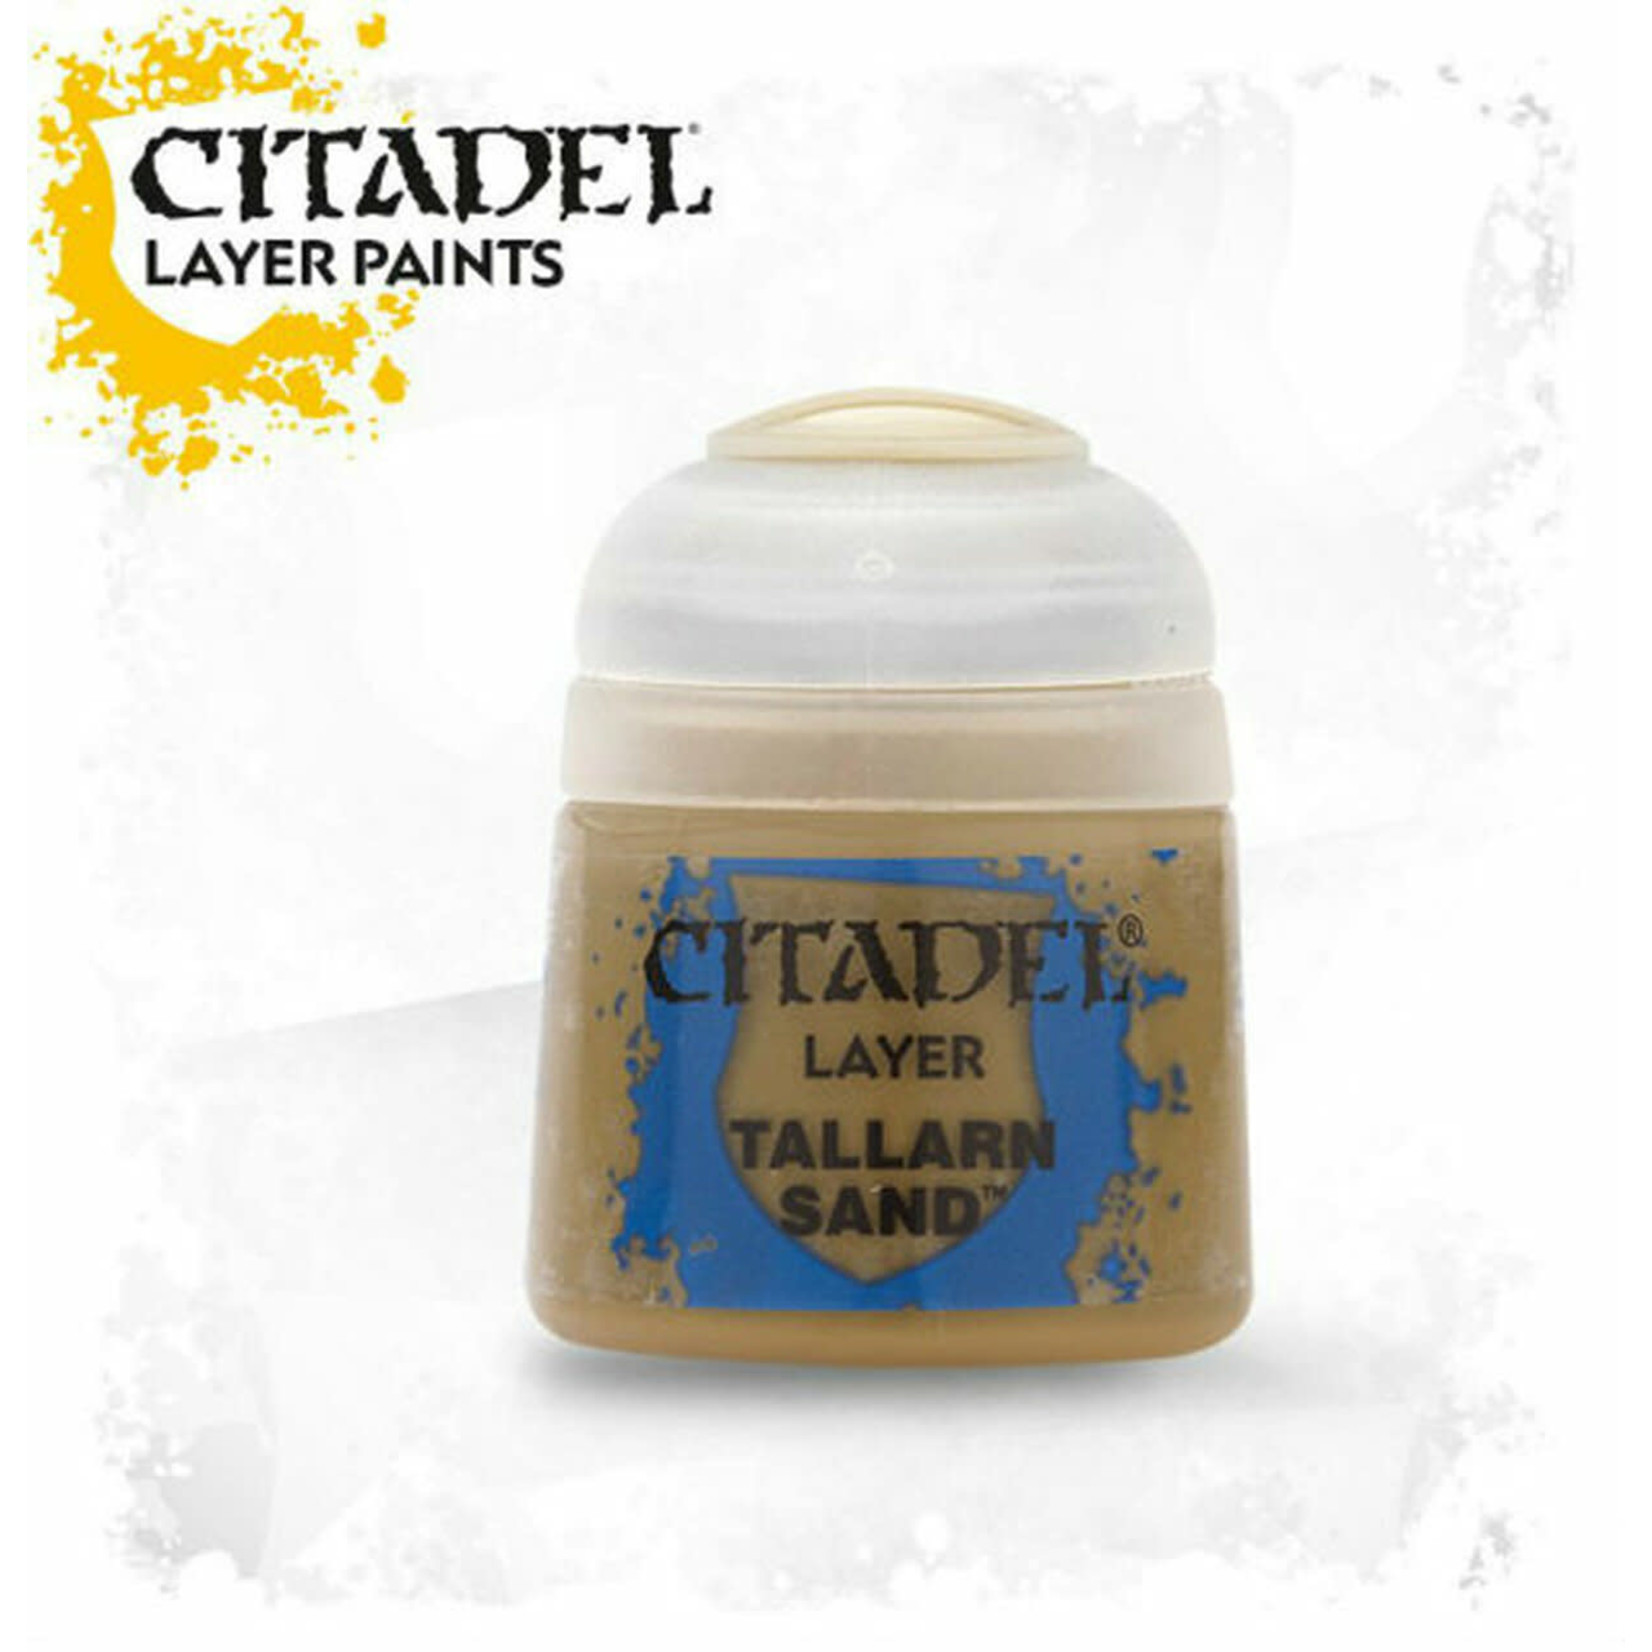 Citadel Layer Paint - Tallarn Sand 12ml